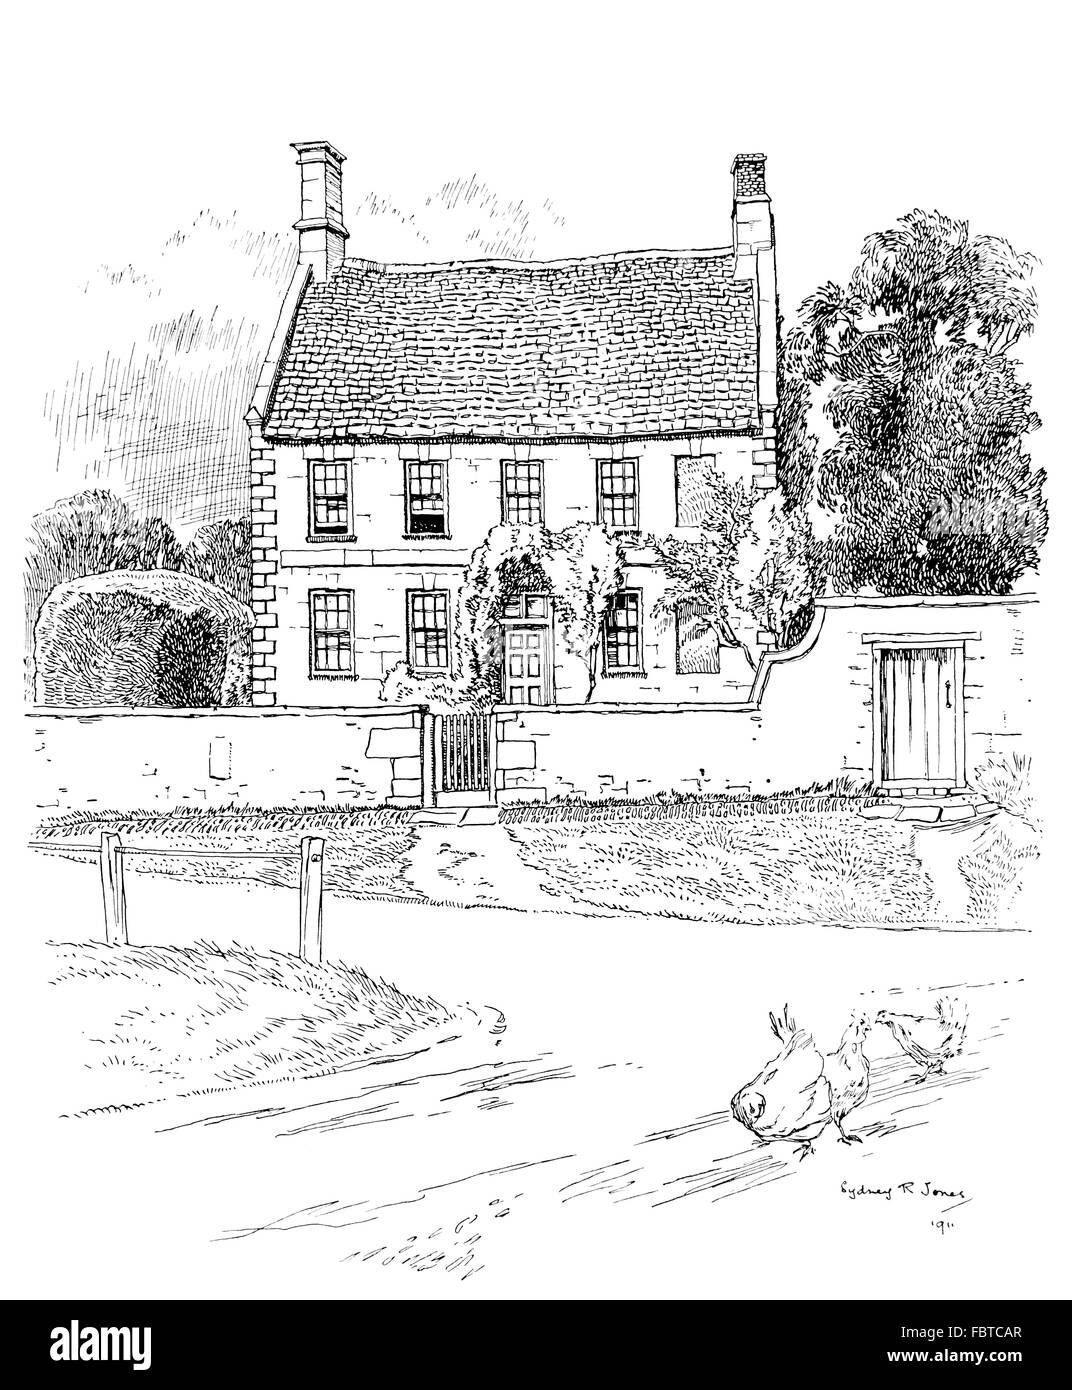 UK, England, Northamptonshire, Upper Boddington, Warwick Road, Manor house in 1911, line illustration by, Sydney R Jones Stock Photo